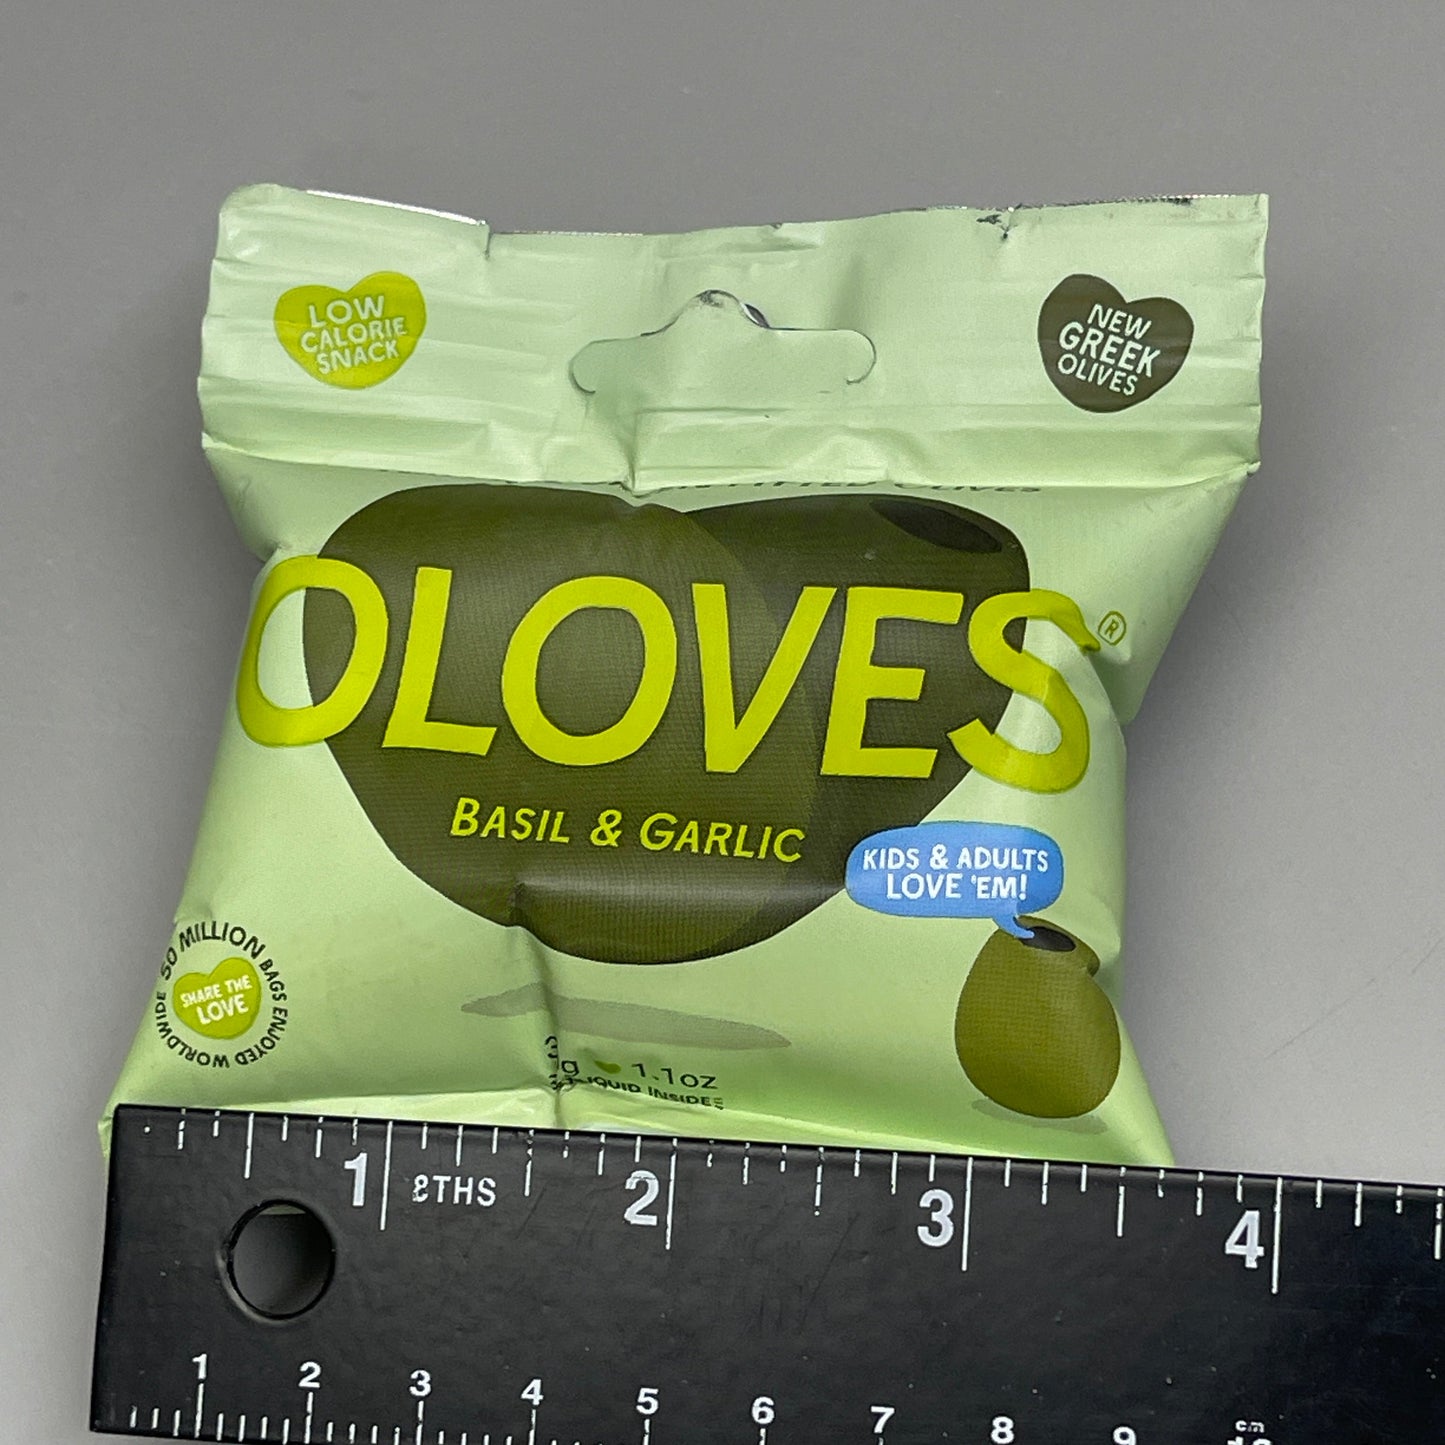 OLOVES (10 PACK) Natural Pitted Basil & Garlic Olives 1.1 oz BB 07/10/24